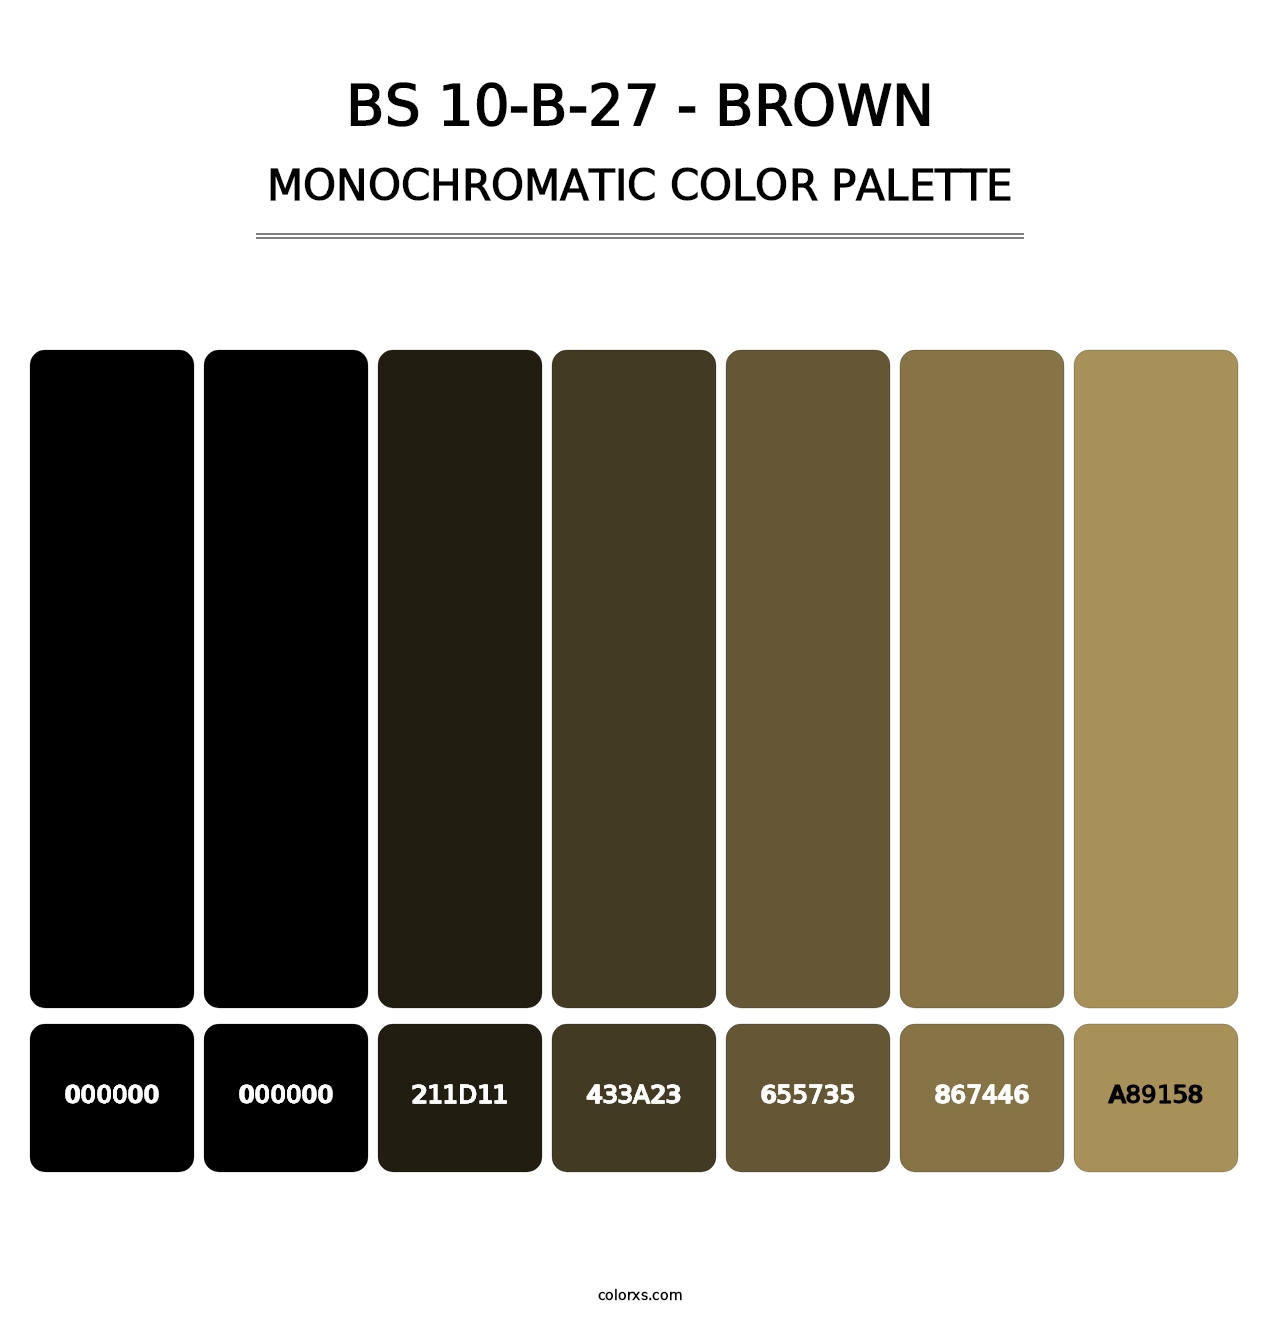 BS 10-B-27 - Brown - Monochromatic Color Palette